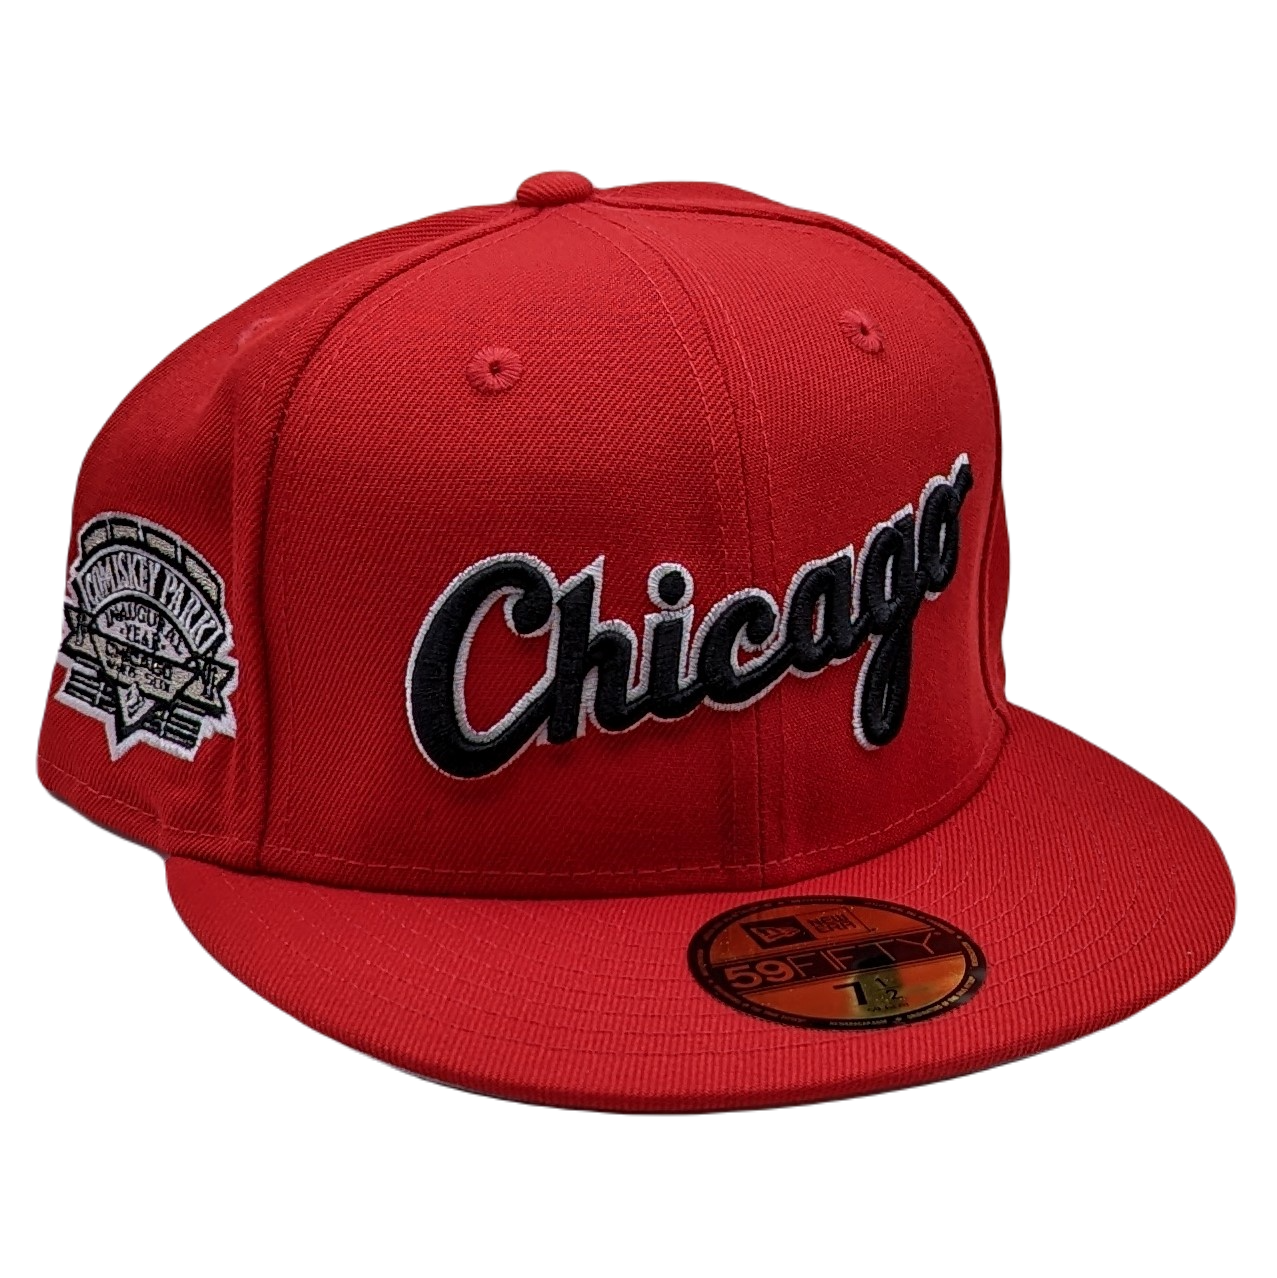 Chicago White Sox Caps - Exklusive Caps für White Sox Fans